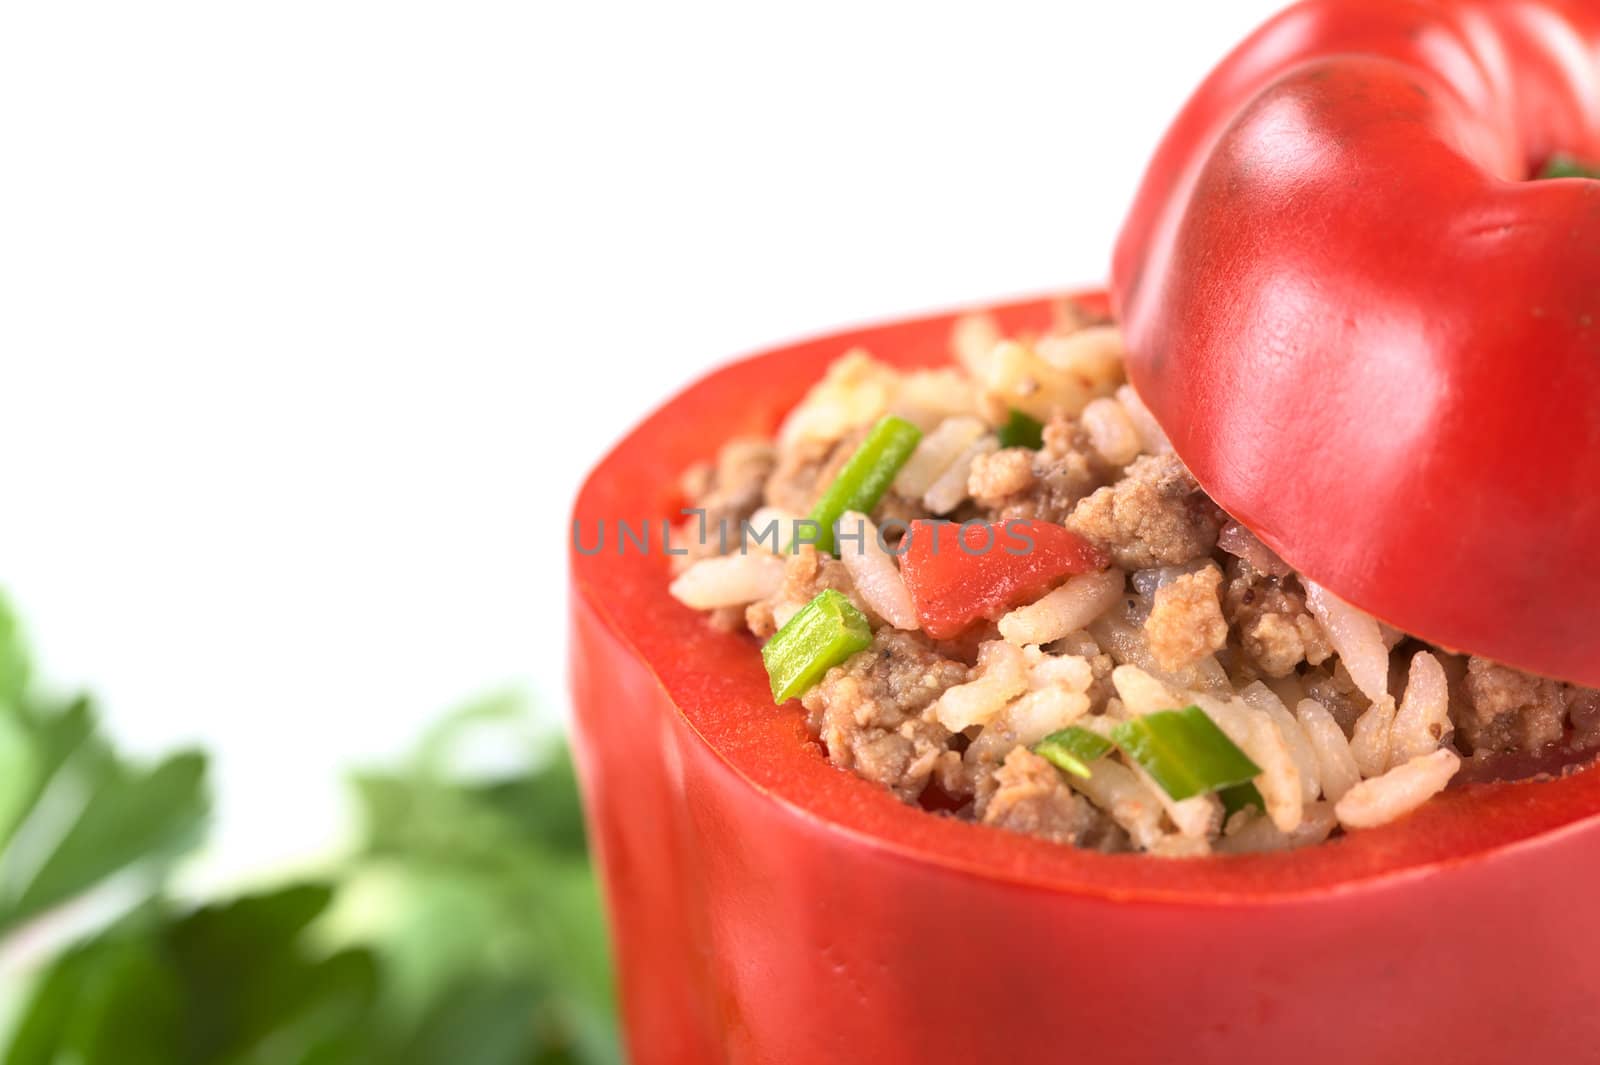 Stuffed Red Bell Pepper by ildi